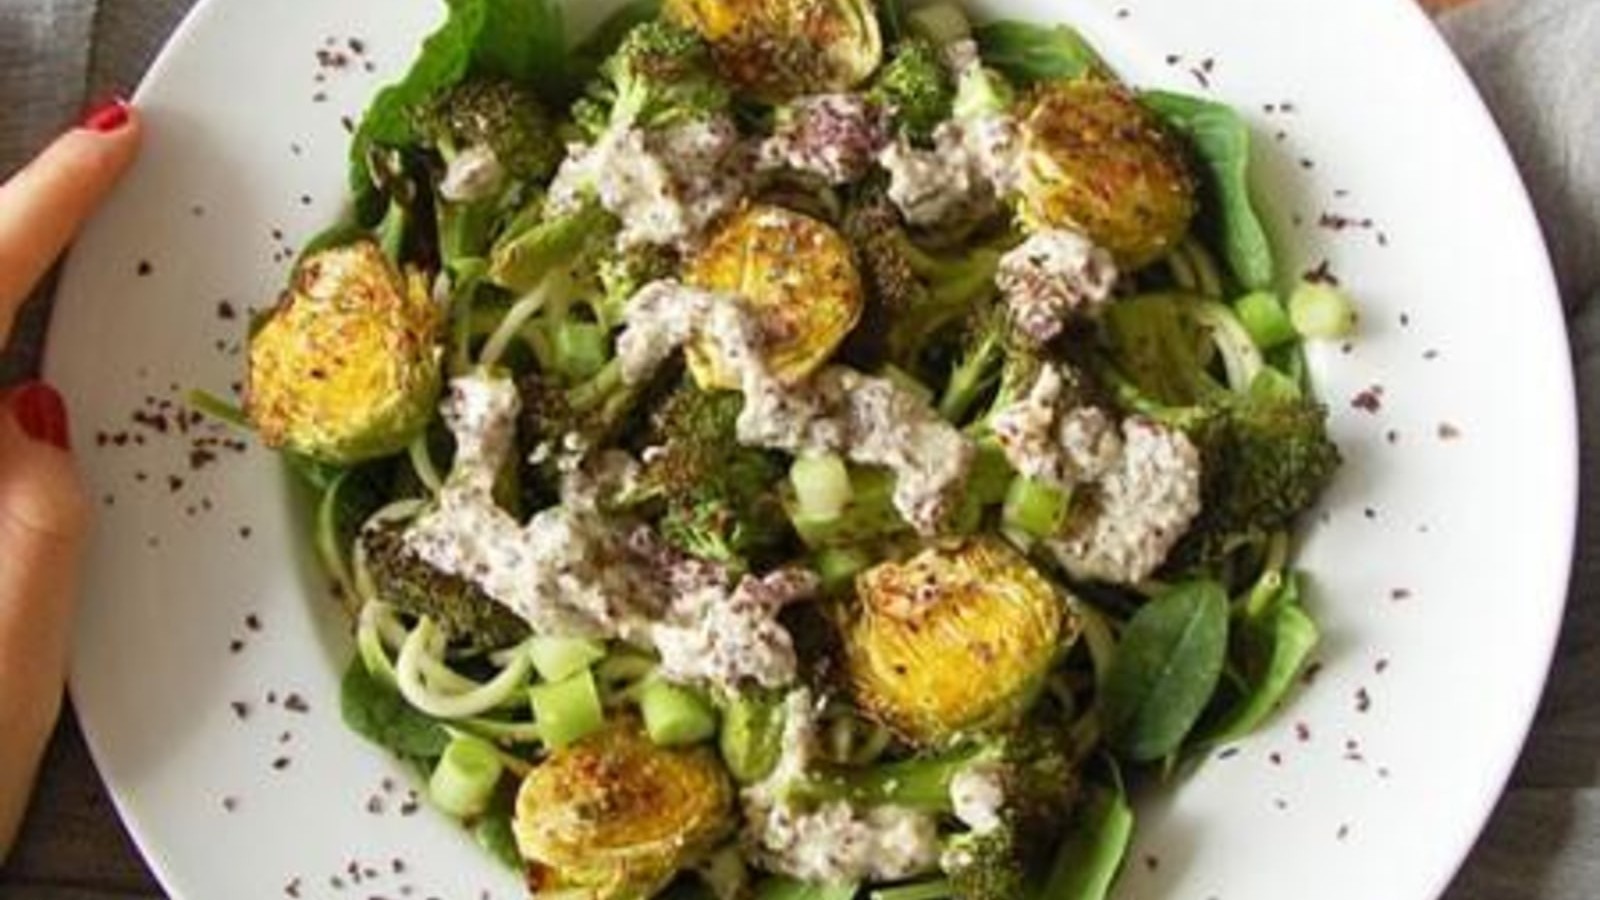 Image of Broccoli salad with tamari and dulse flake dressing